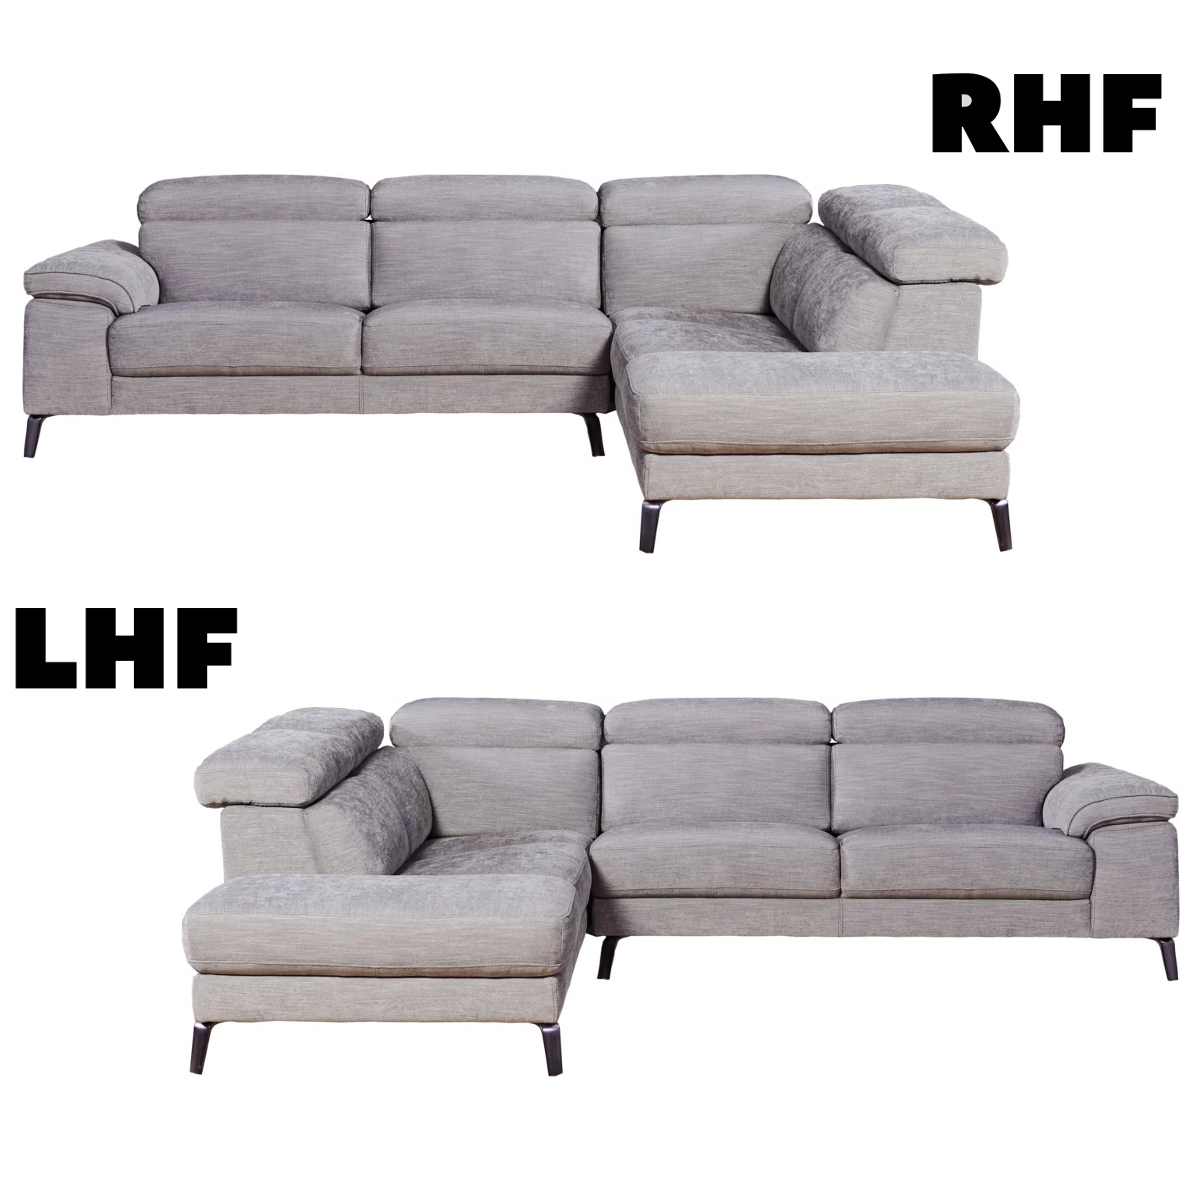 Fulton RHF Corner Sofa